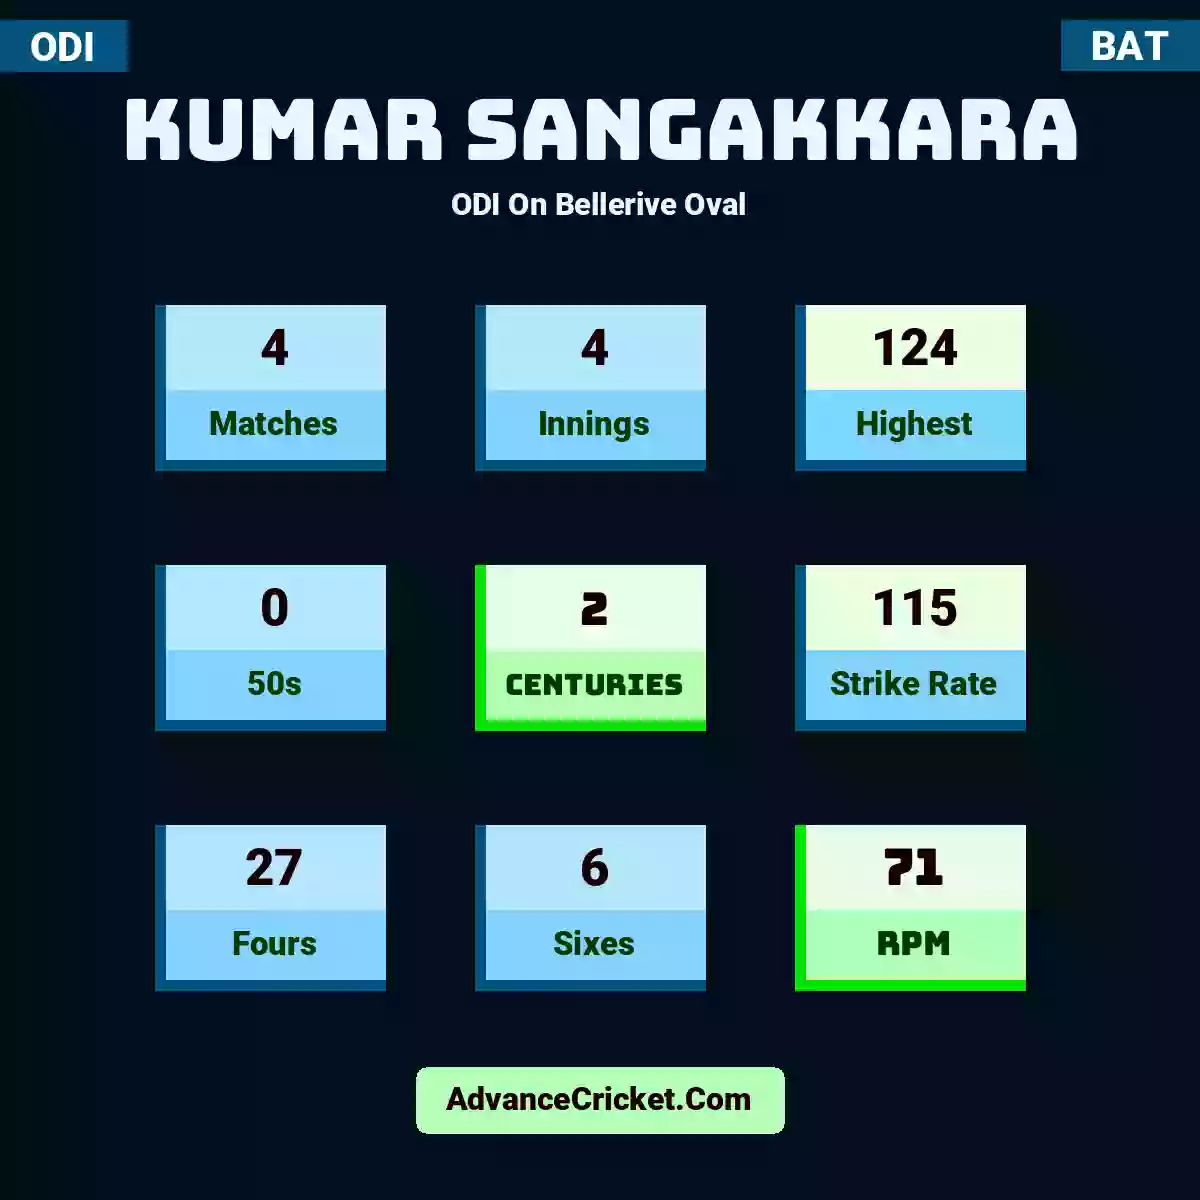 Kumar Sangakkara ODI  On Bellerive Oval, Kumar Sangakkara played 4 matches, scored 124 runs as highest, 0 half-centuries, and 2 centuries, with a strike rate of 115. K.Sangakkara hit 27 fours and 6 sixes, with an RPM of 71.